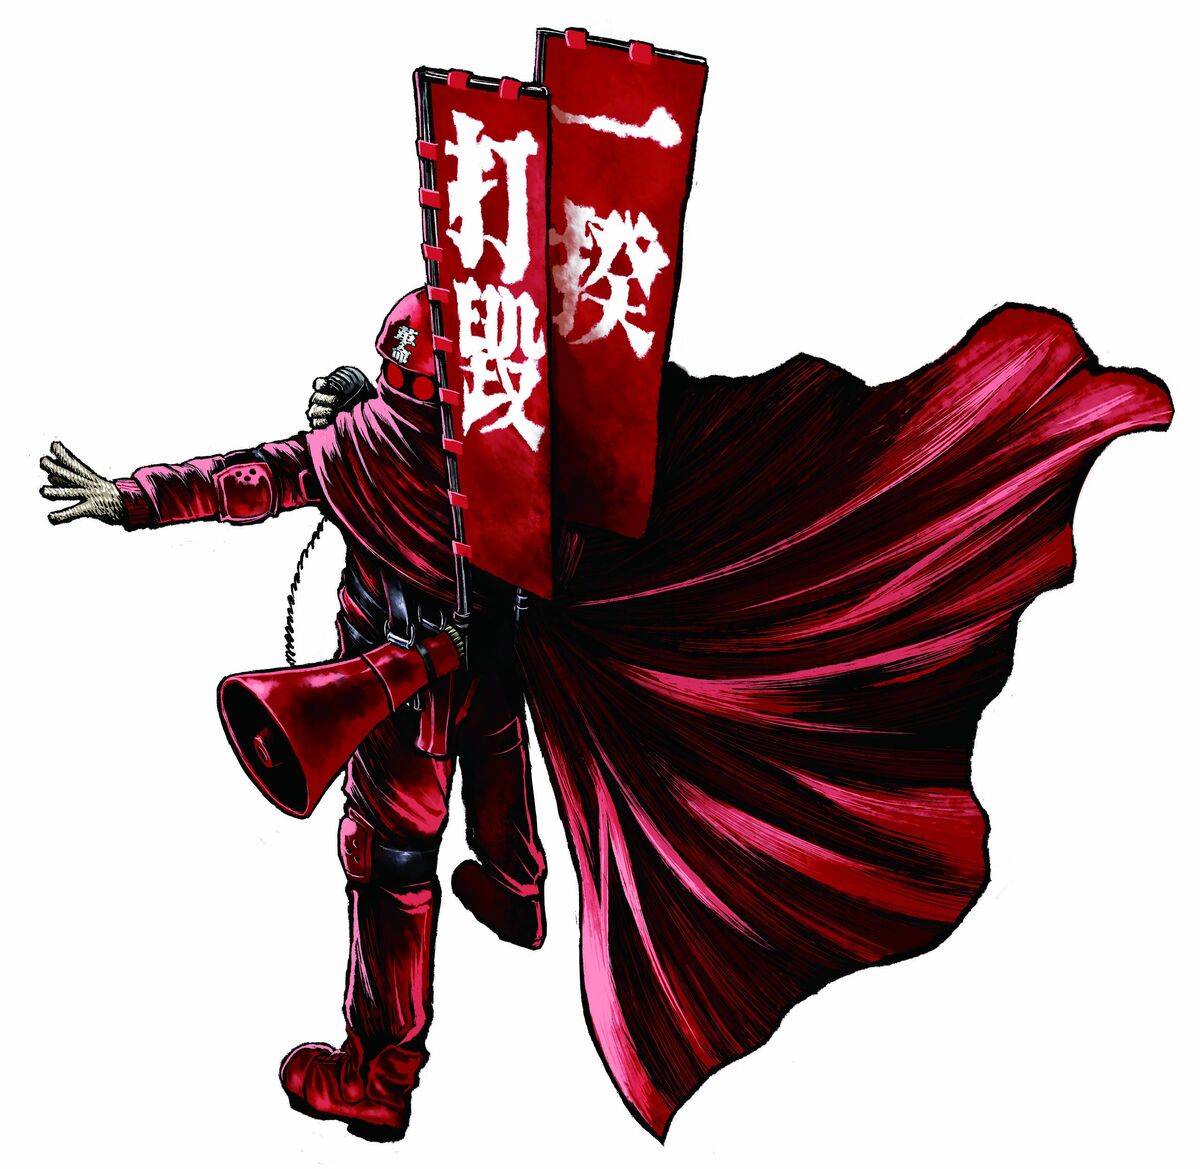 Yamoto Koki, Ninja Slayer Wiki, Fandom